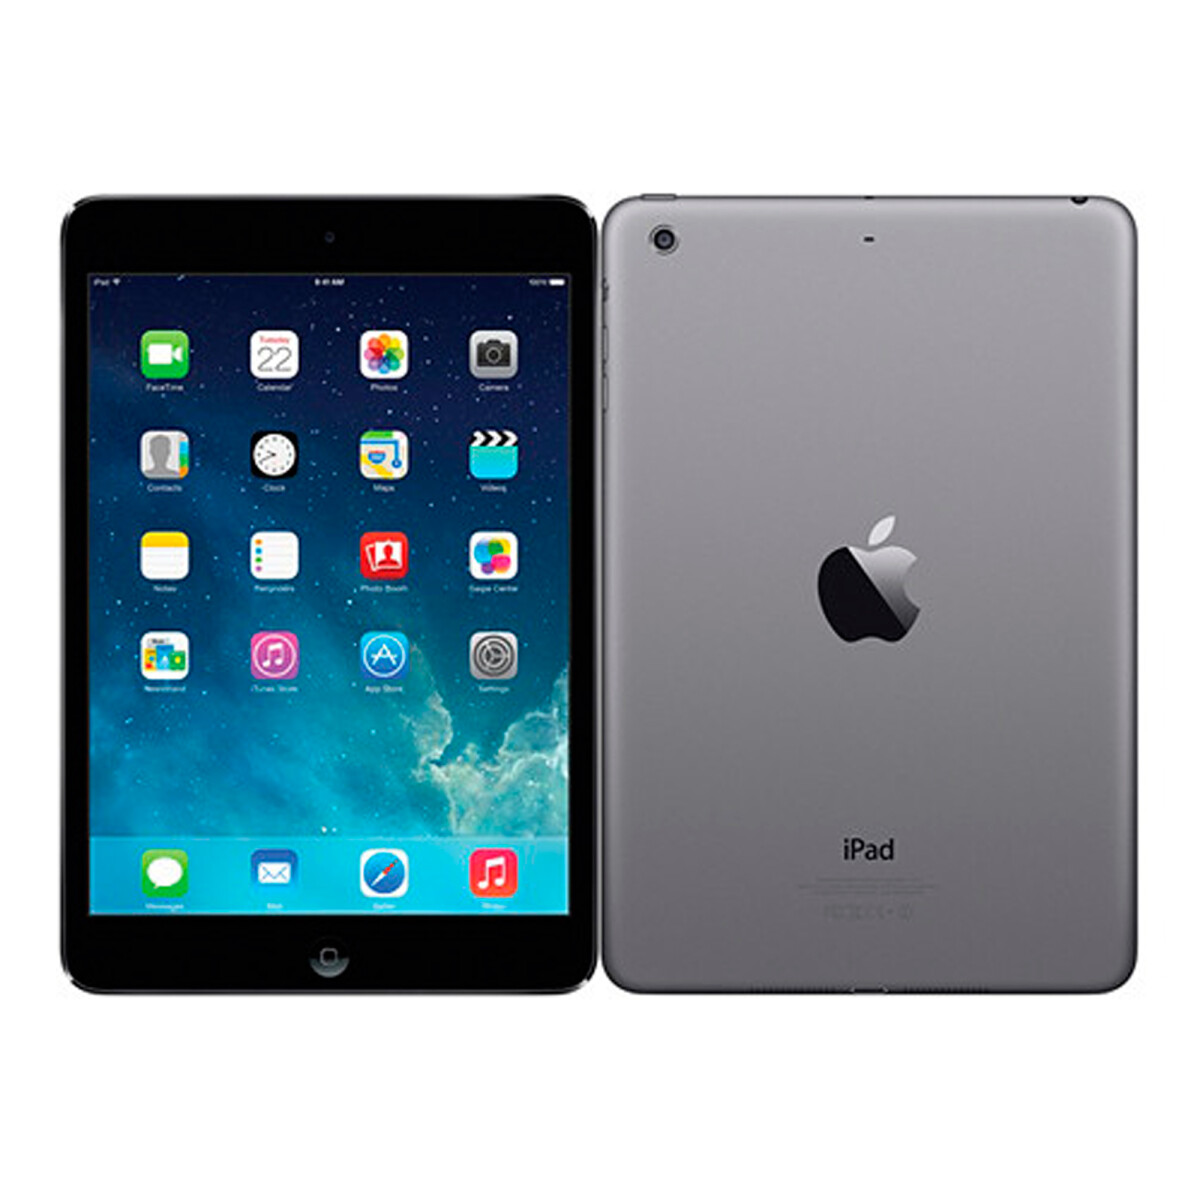 Apple - Tablet Ipad Mini 2 ME276LL/A - 7,9" Multitáctil ips Lcd. Dual Core. Ios. Ram 1GB / Rom 16GB. - 001 